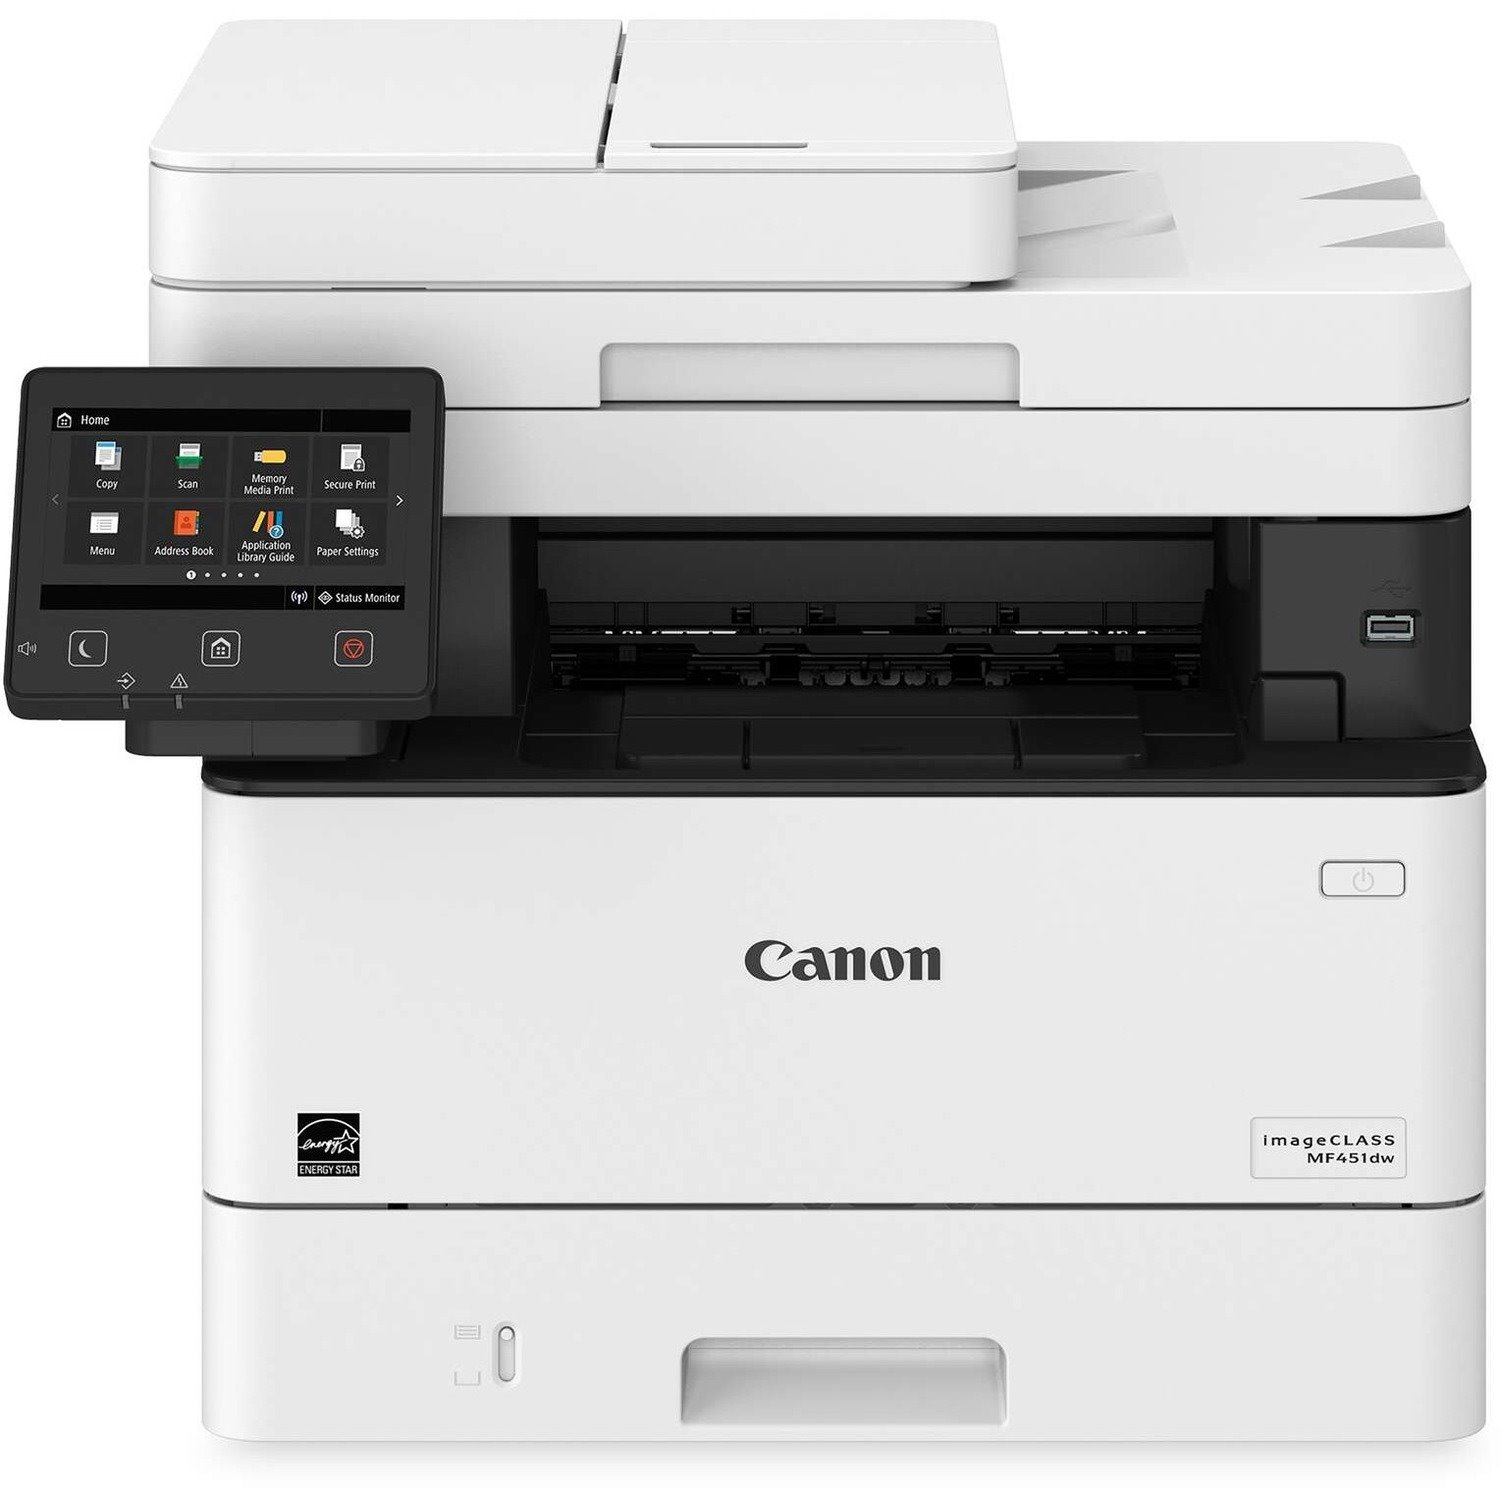 Canon imageCLASS MF450 MF451dw Wireless Laser Multifunction Printer - Monochrome